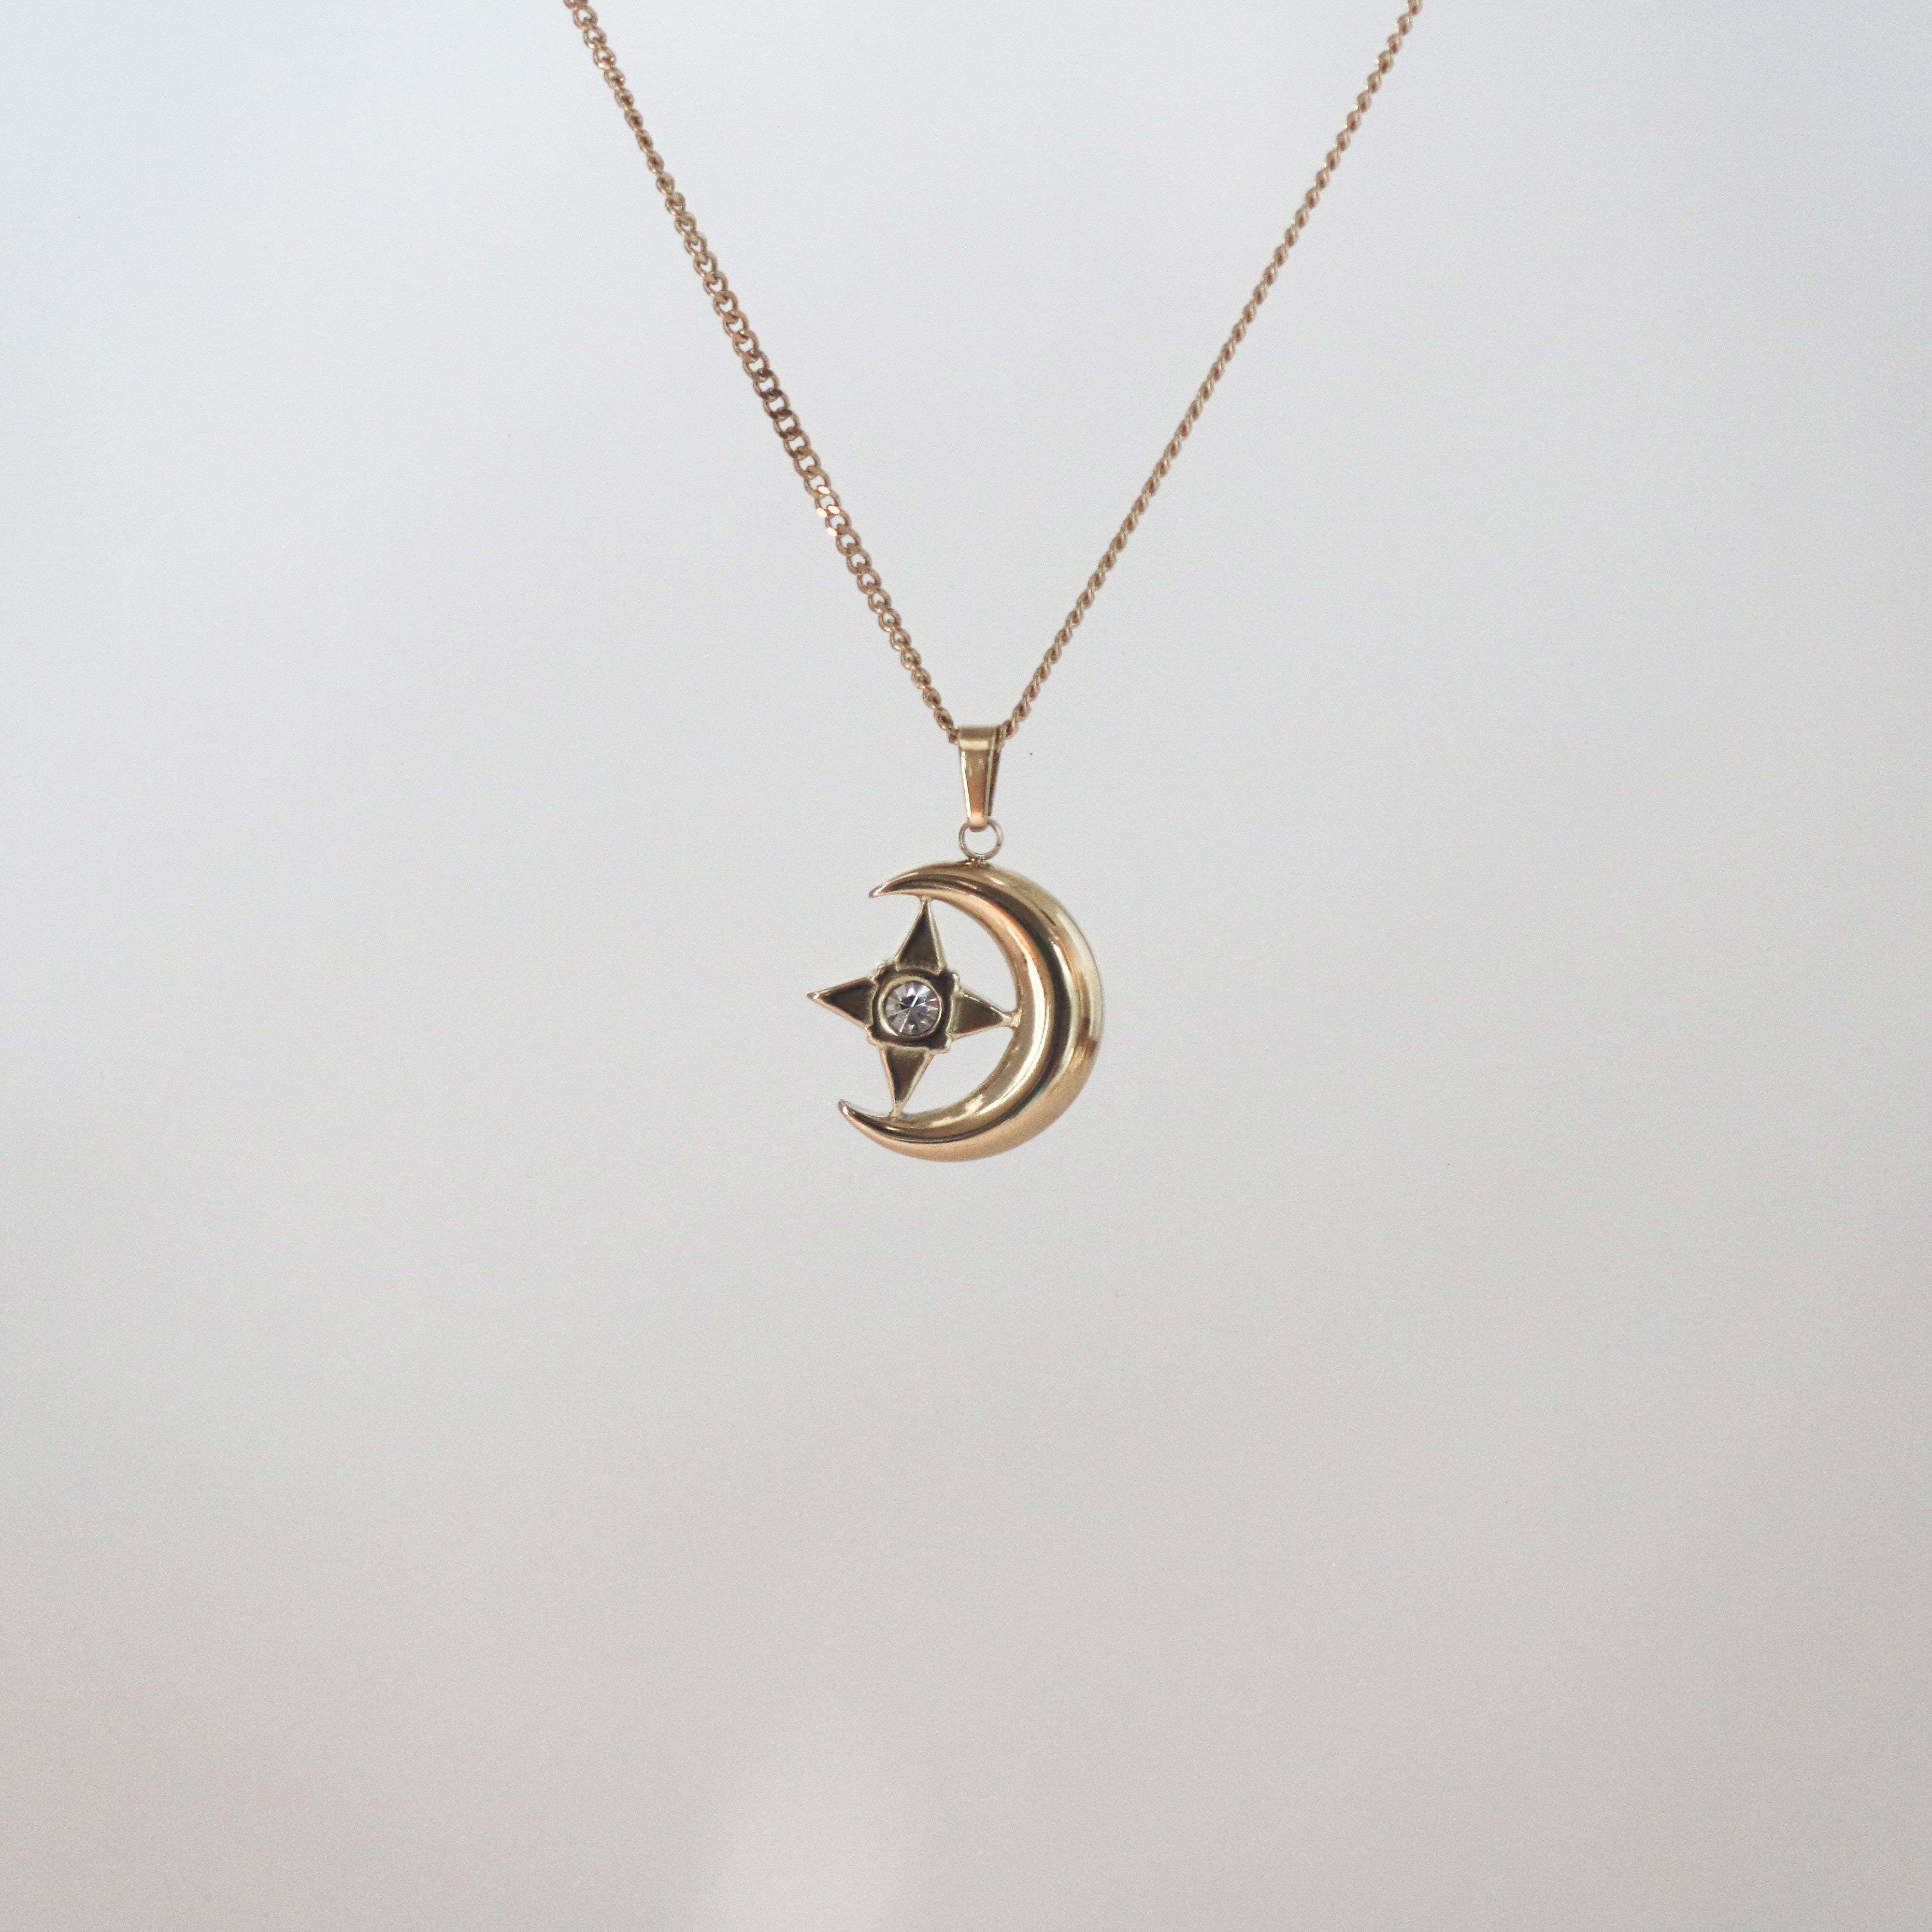 Meideya Jewelry Crescent Moon Star Pendant Necklace